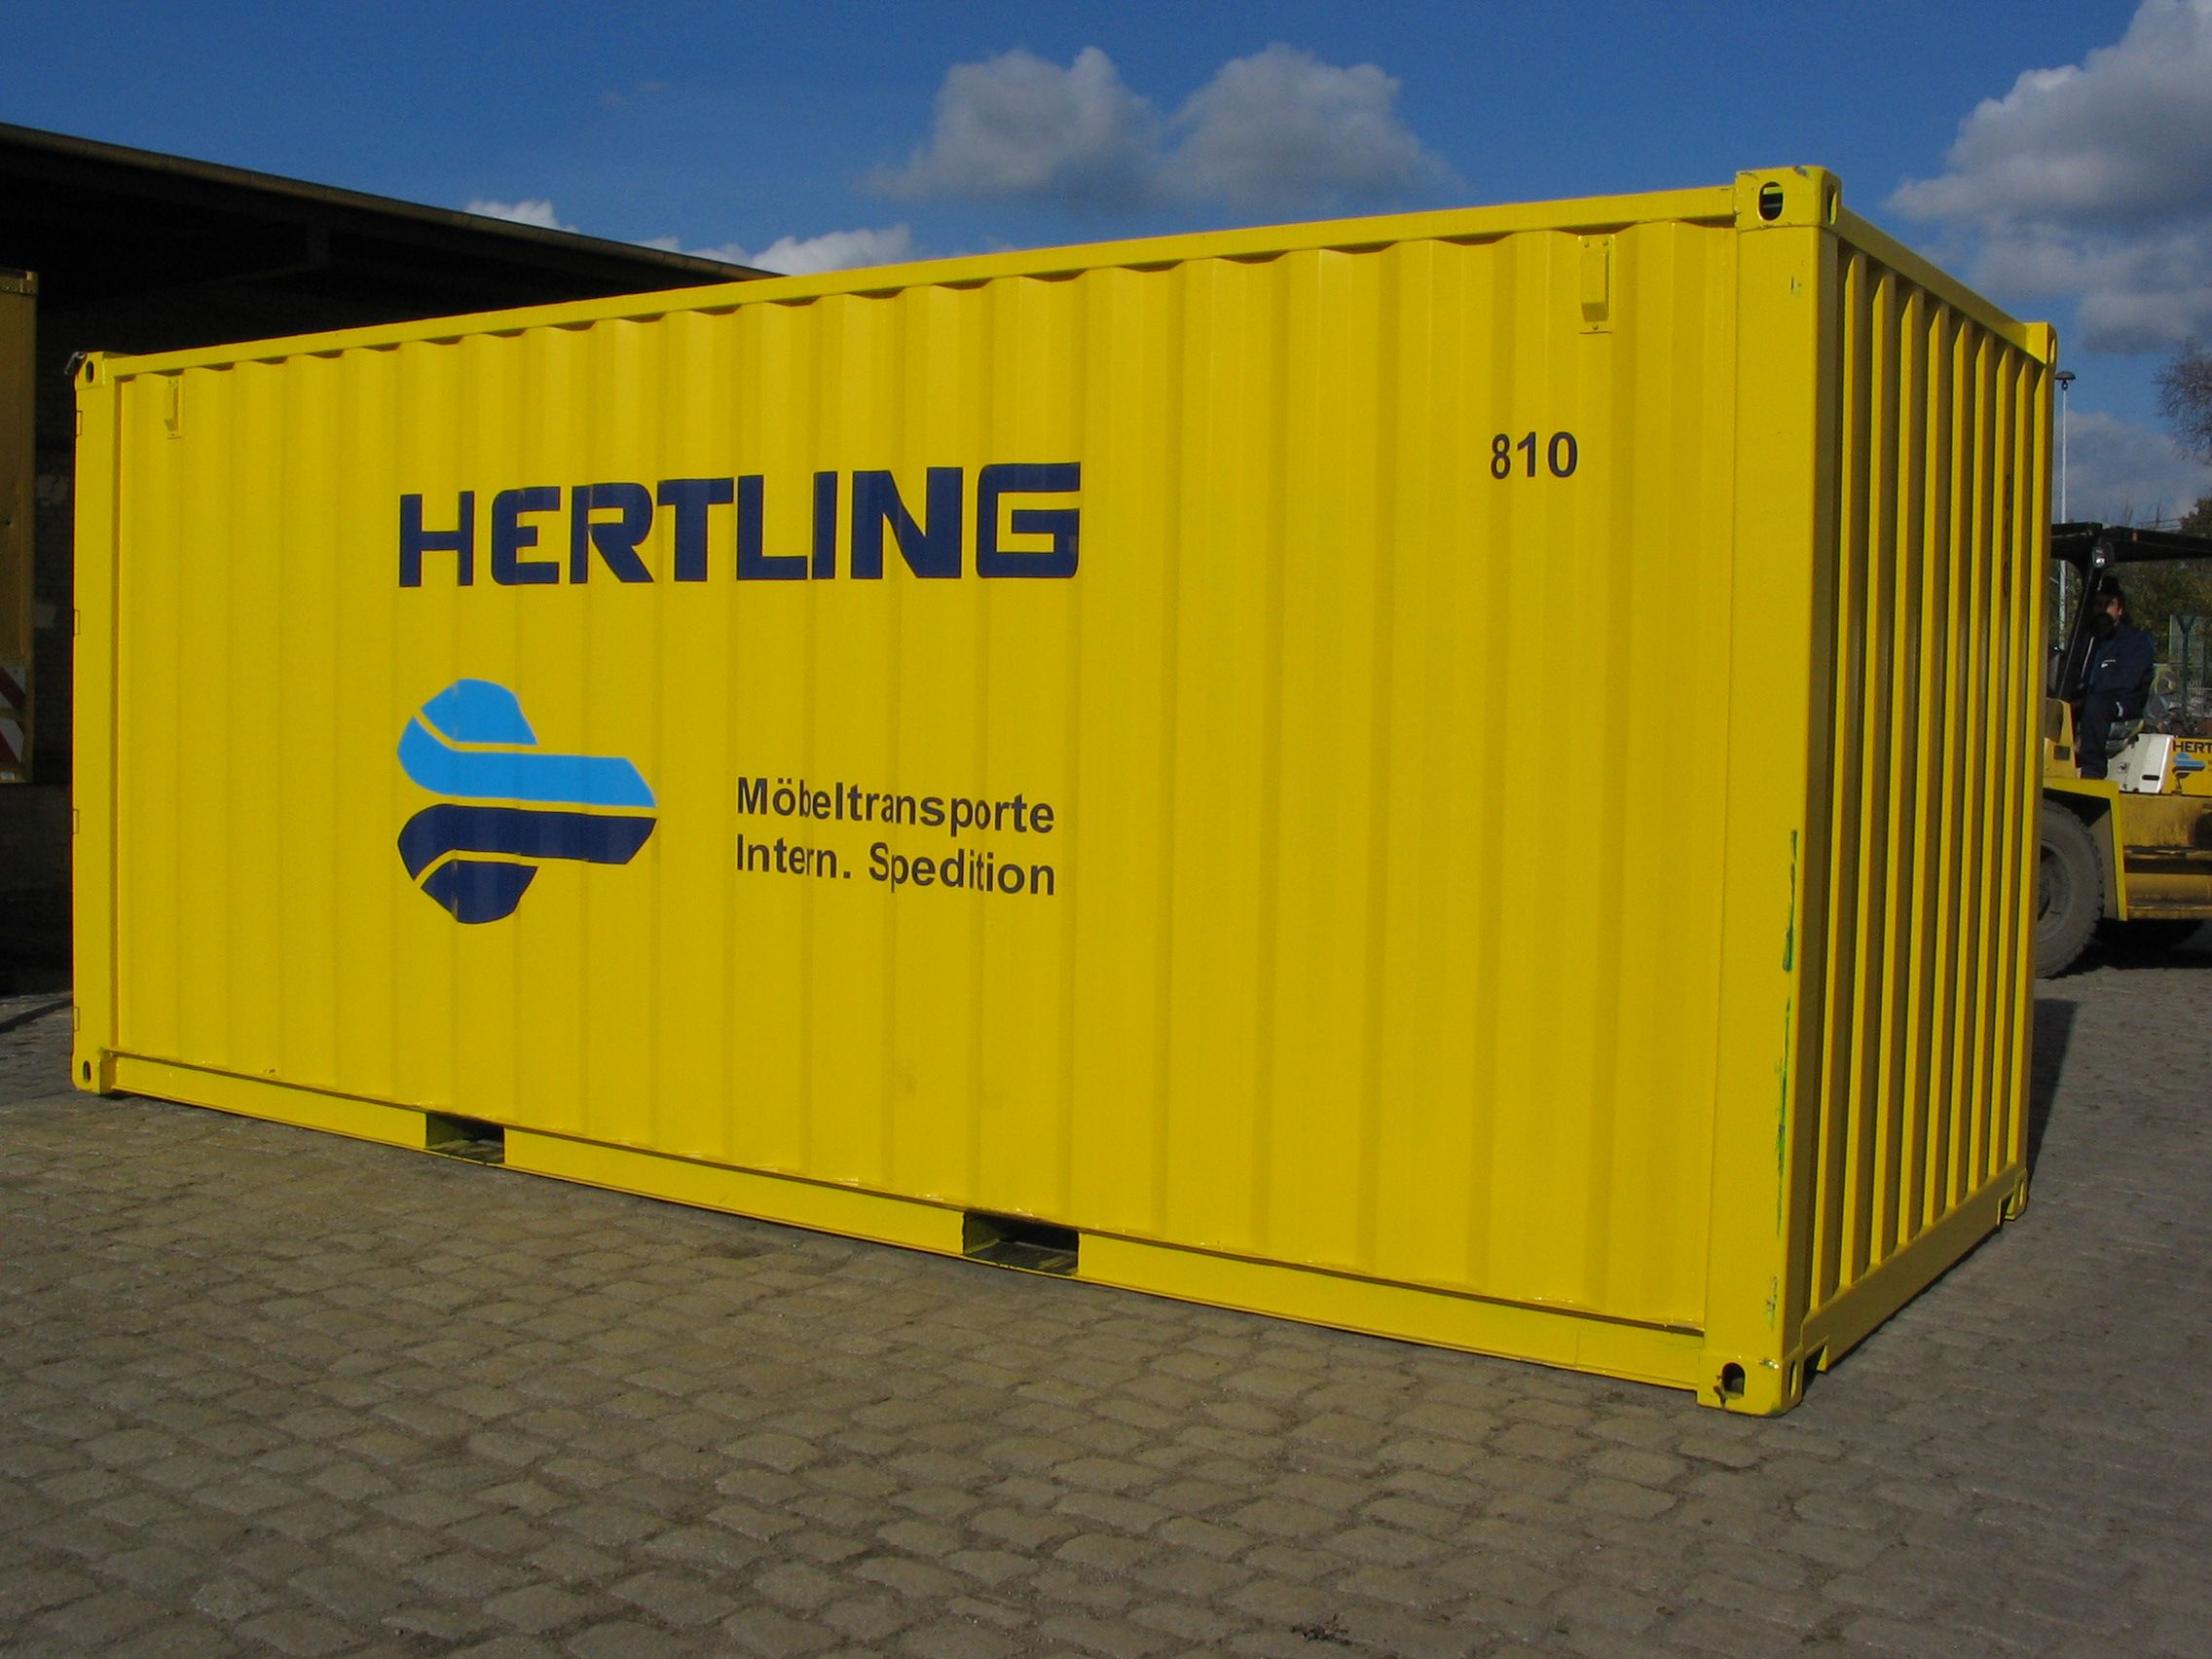 Hertling Containerlagerung Berlin